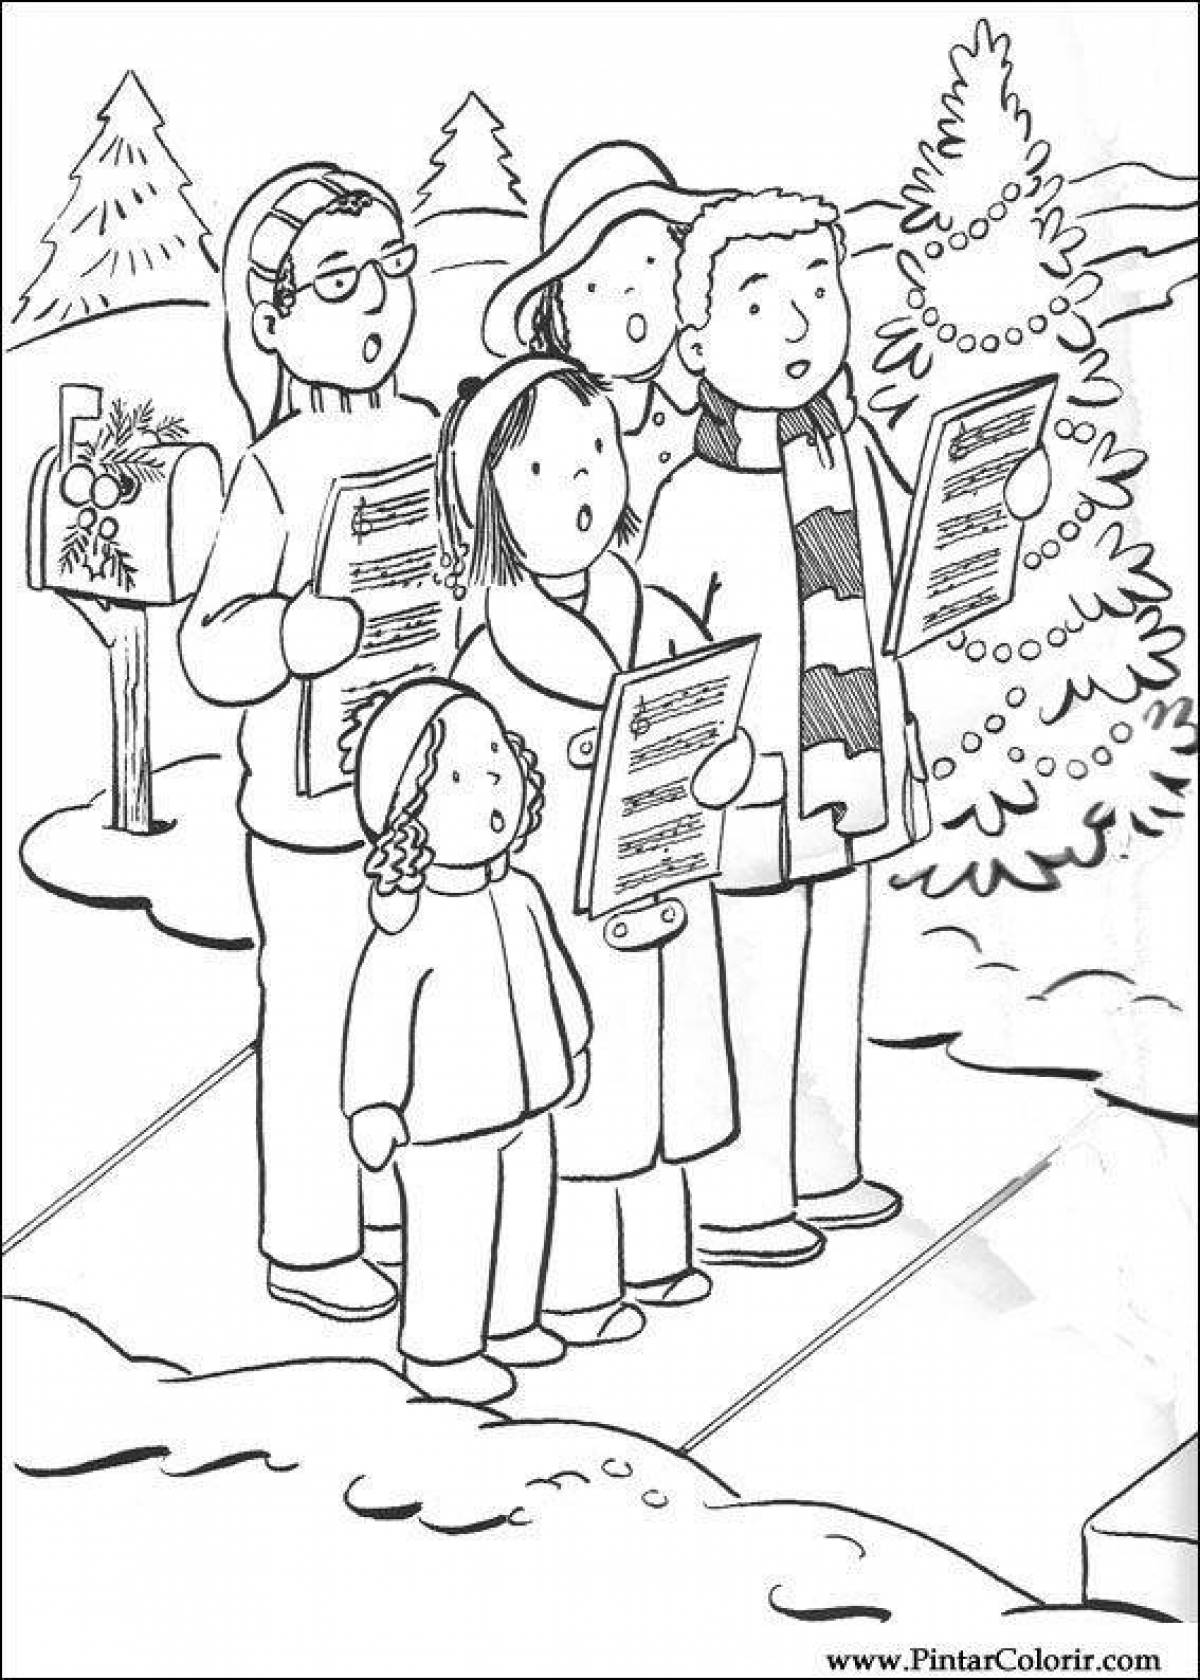 Christmas carols playful coloring book for kids